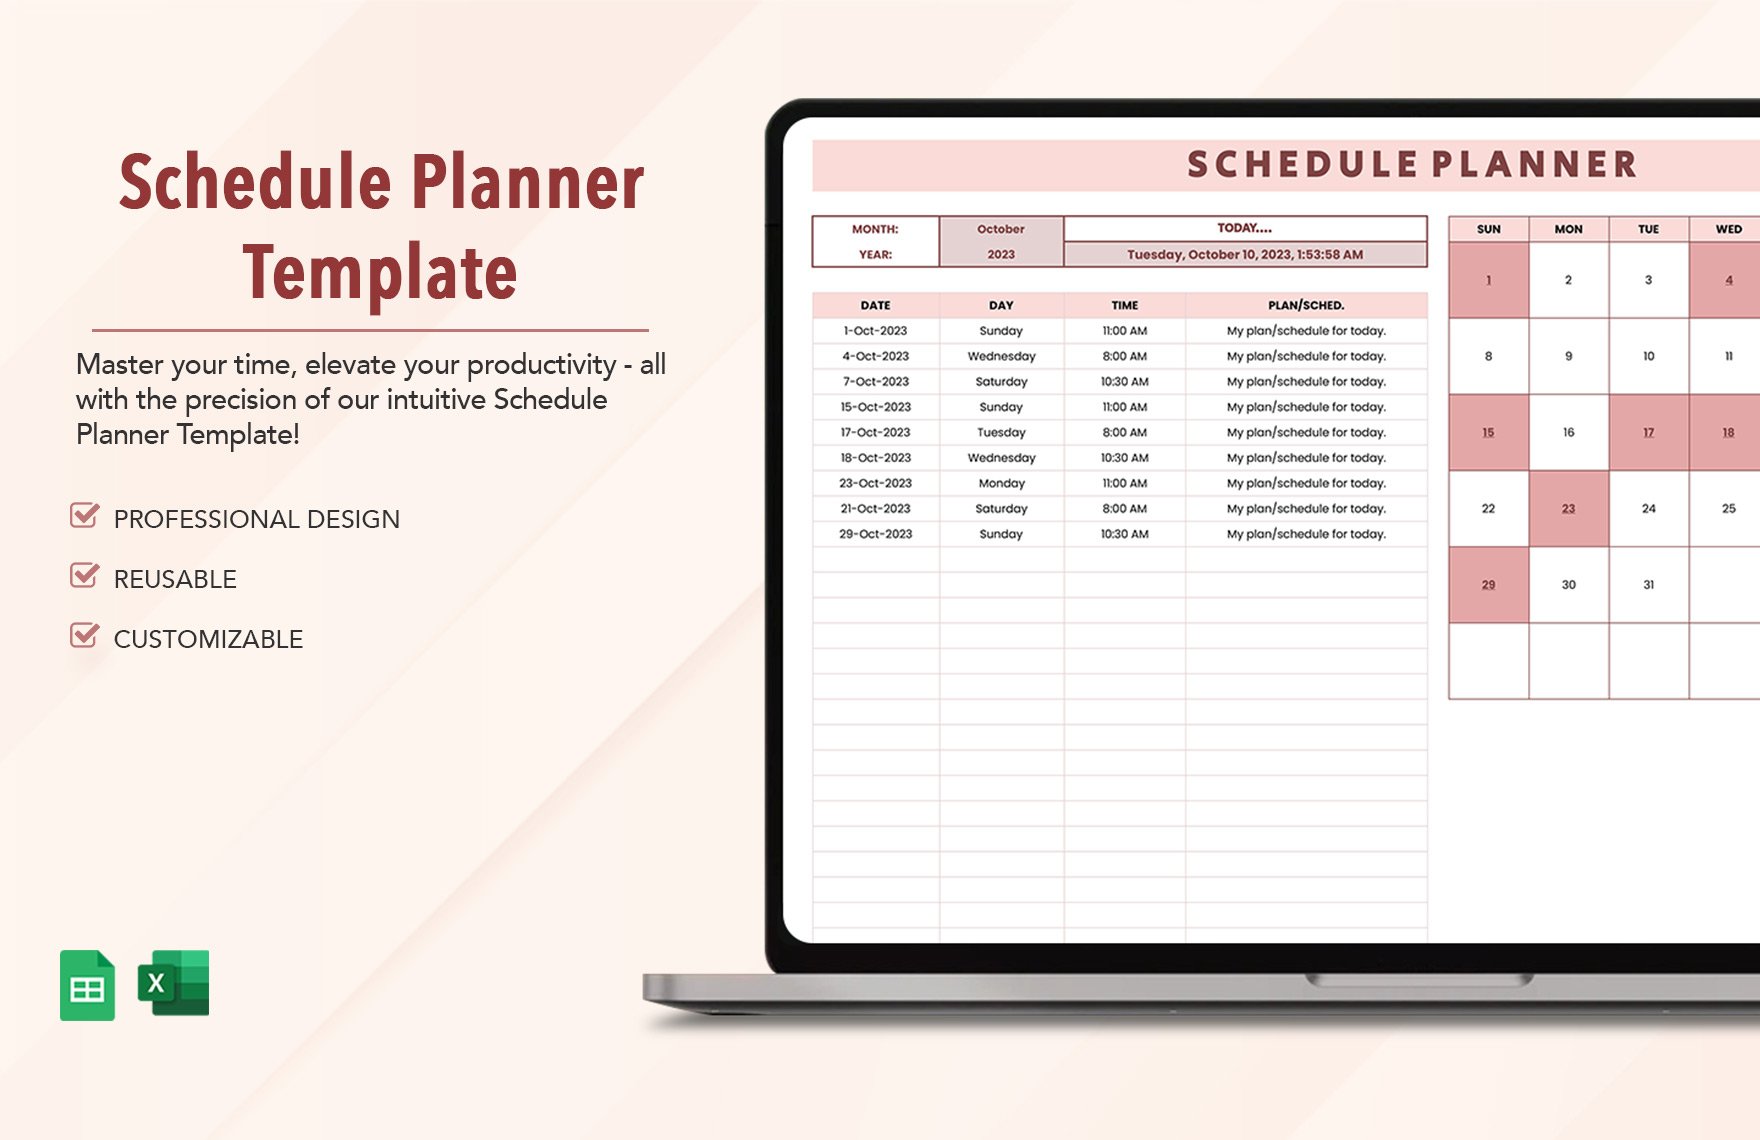 Schedule Planner Template